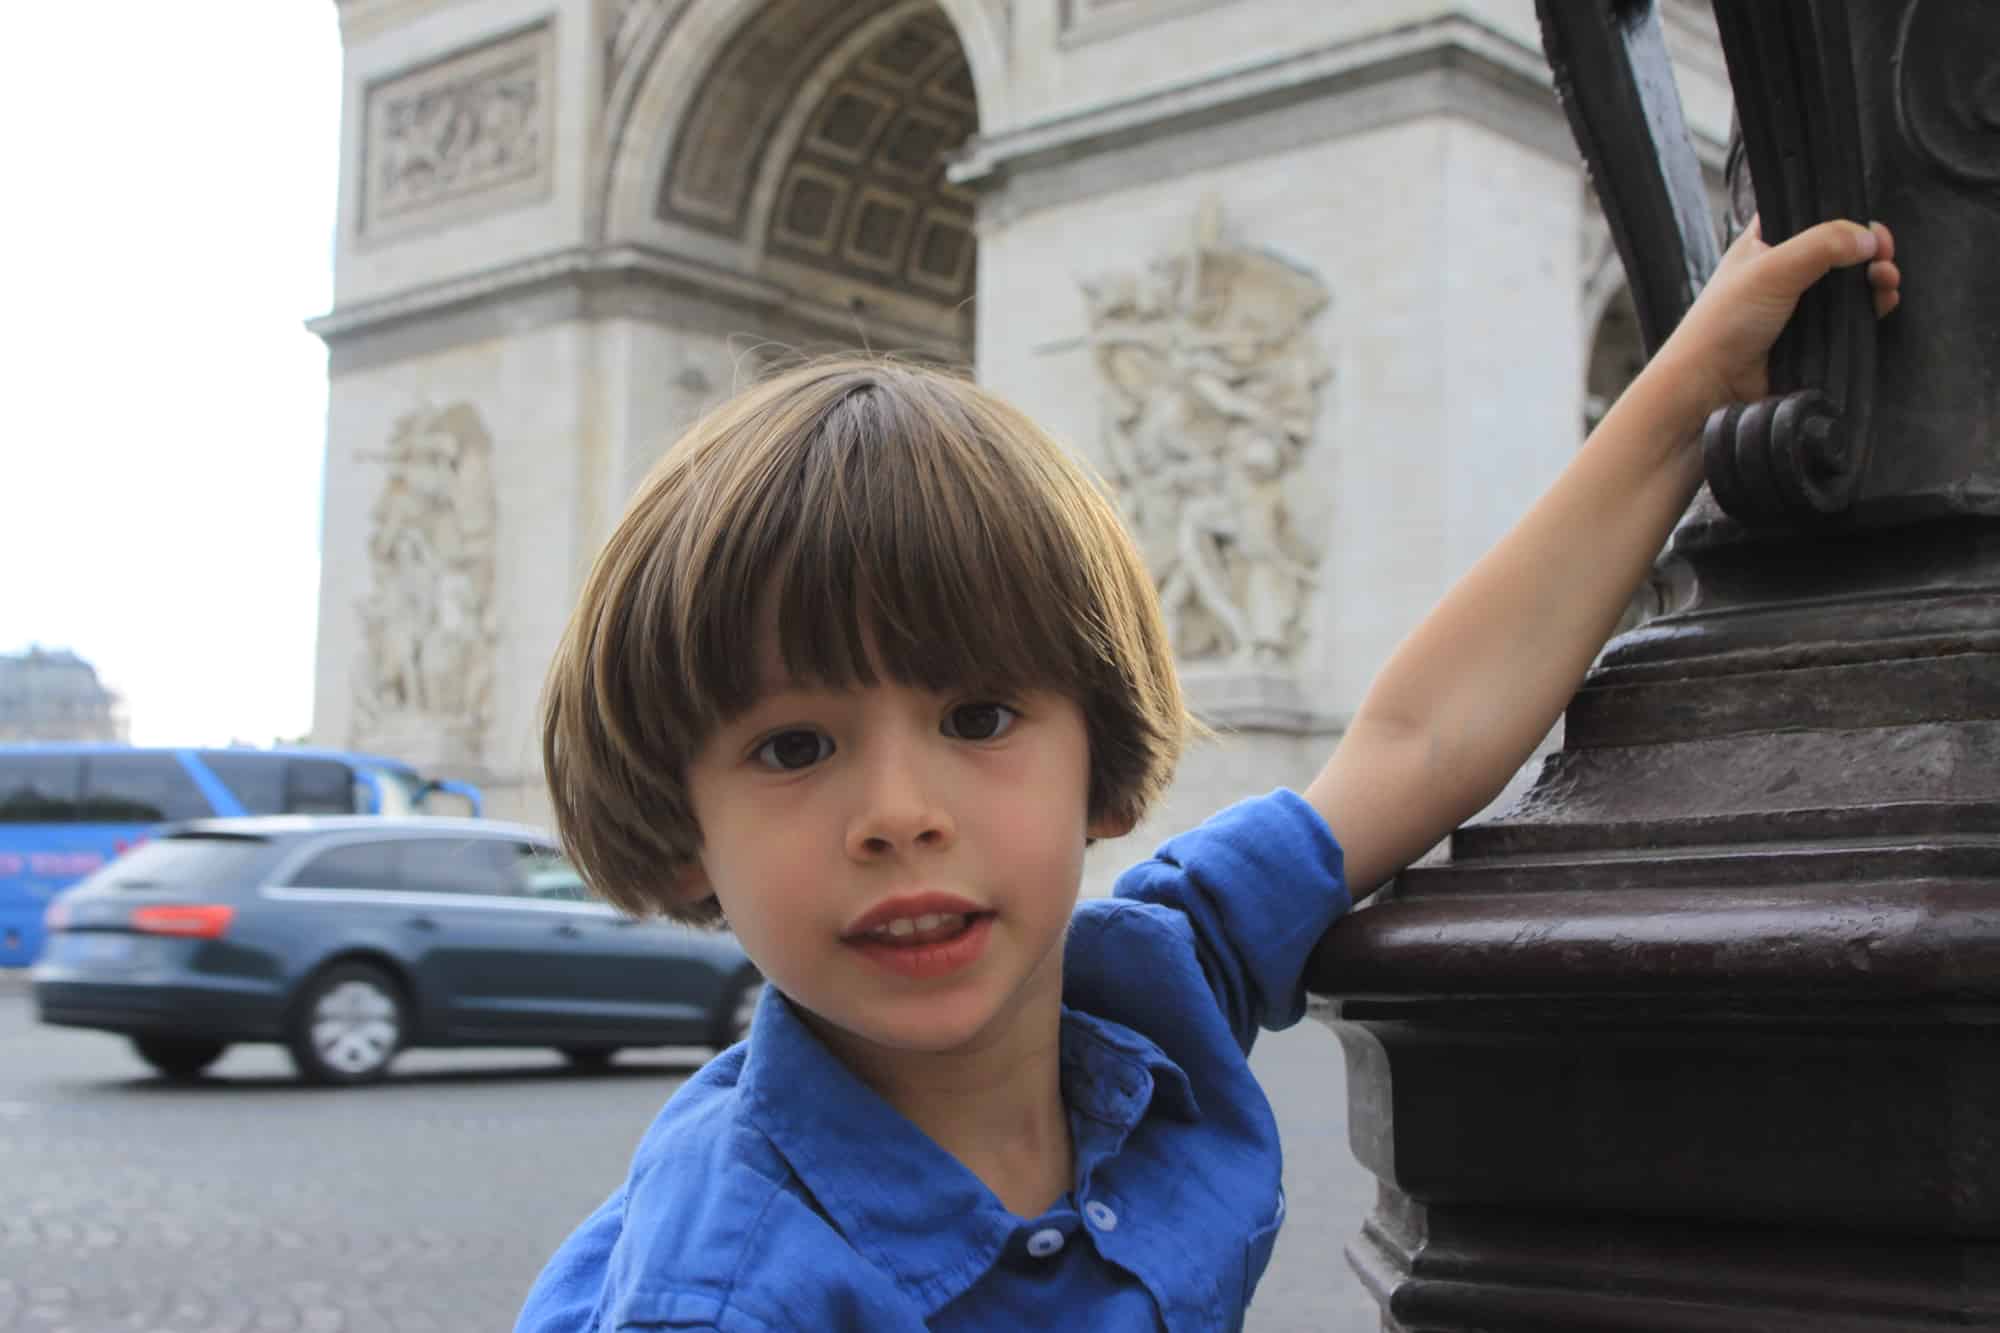 Cheap activities for kids in Paris